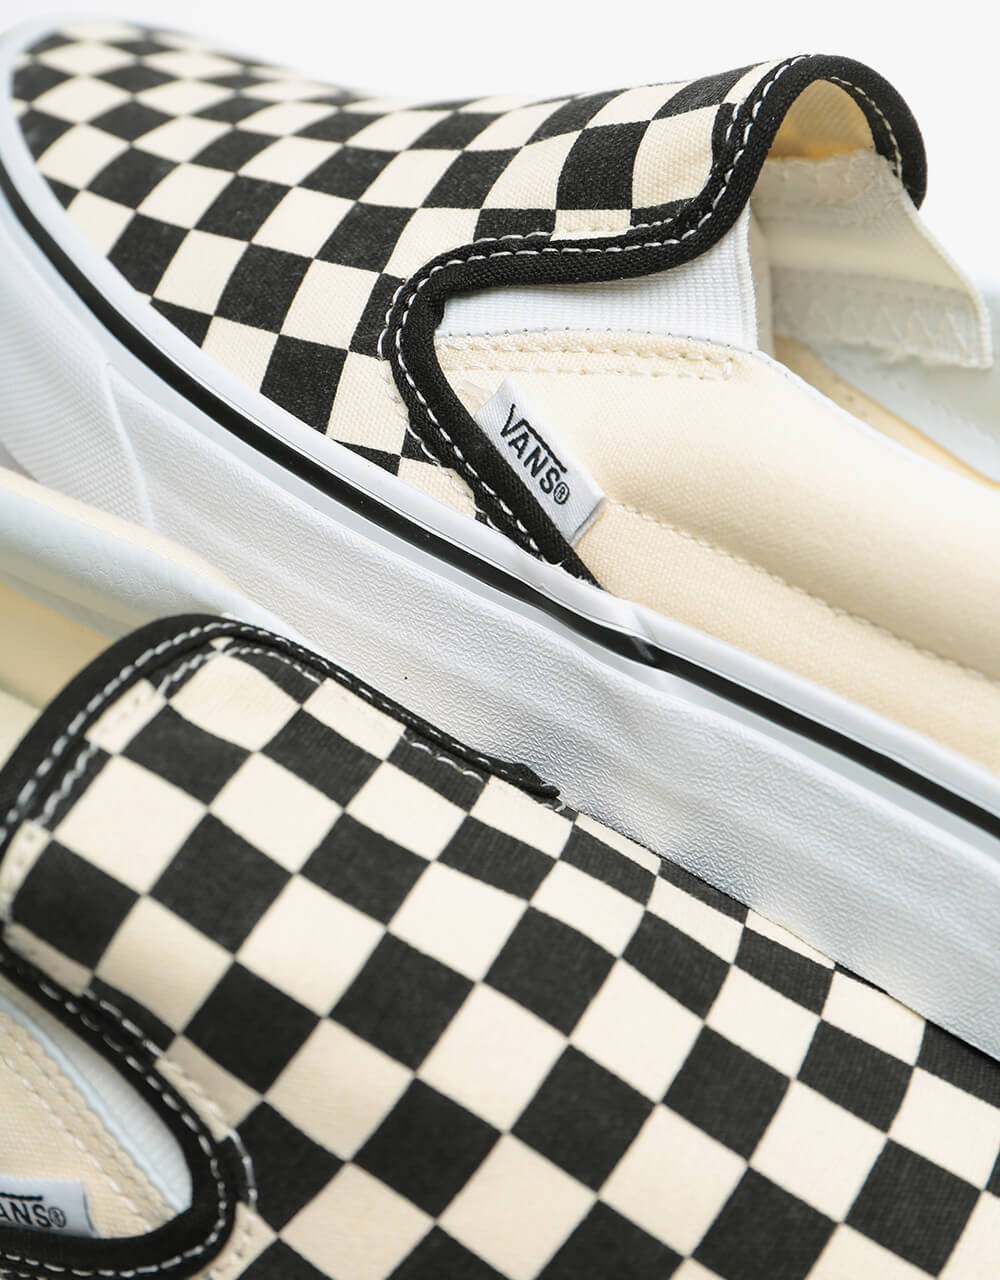 Vans Classic Slip On Skate Shoes - Black/White/Checker White